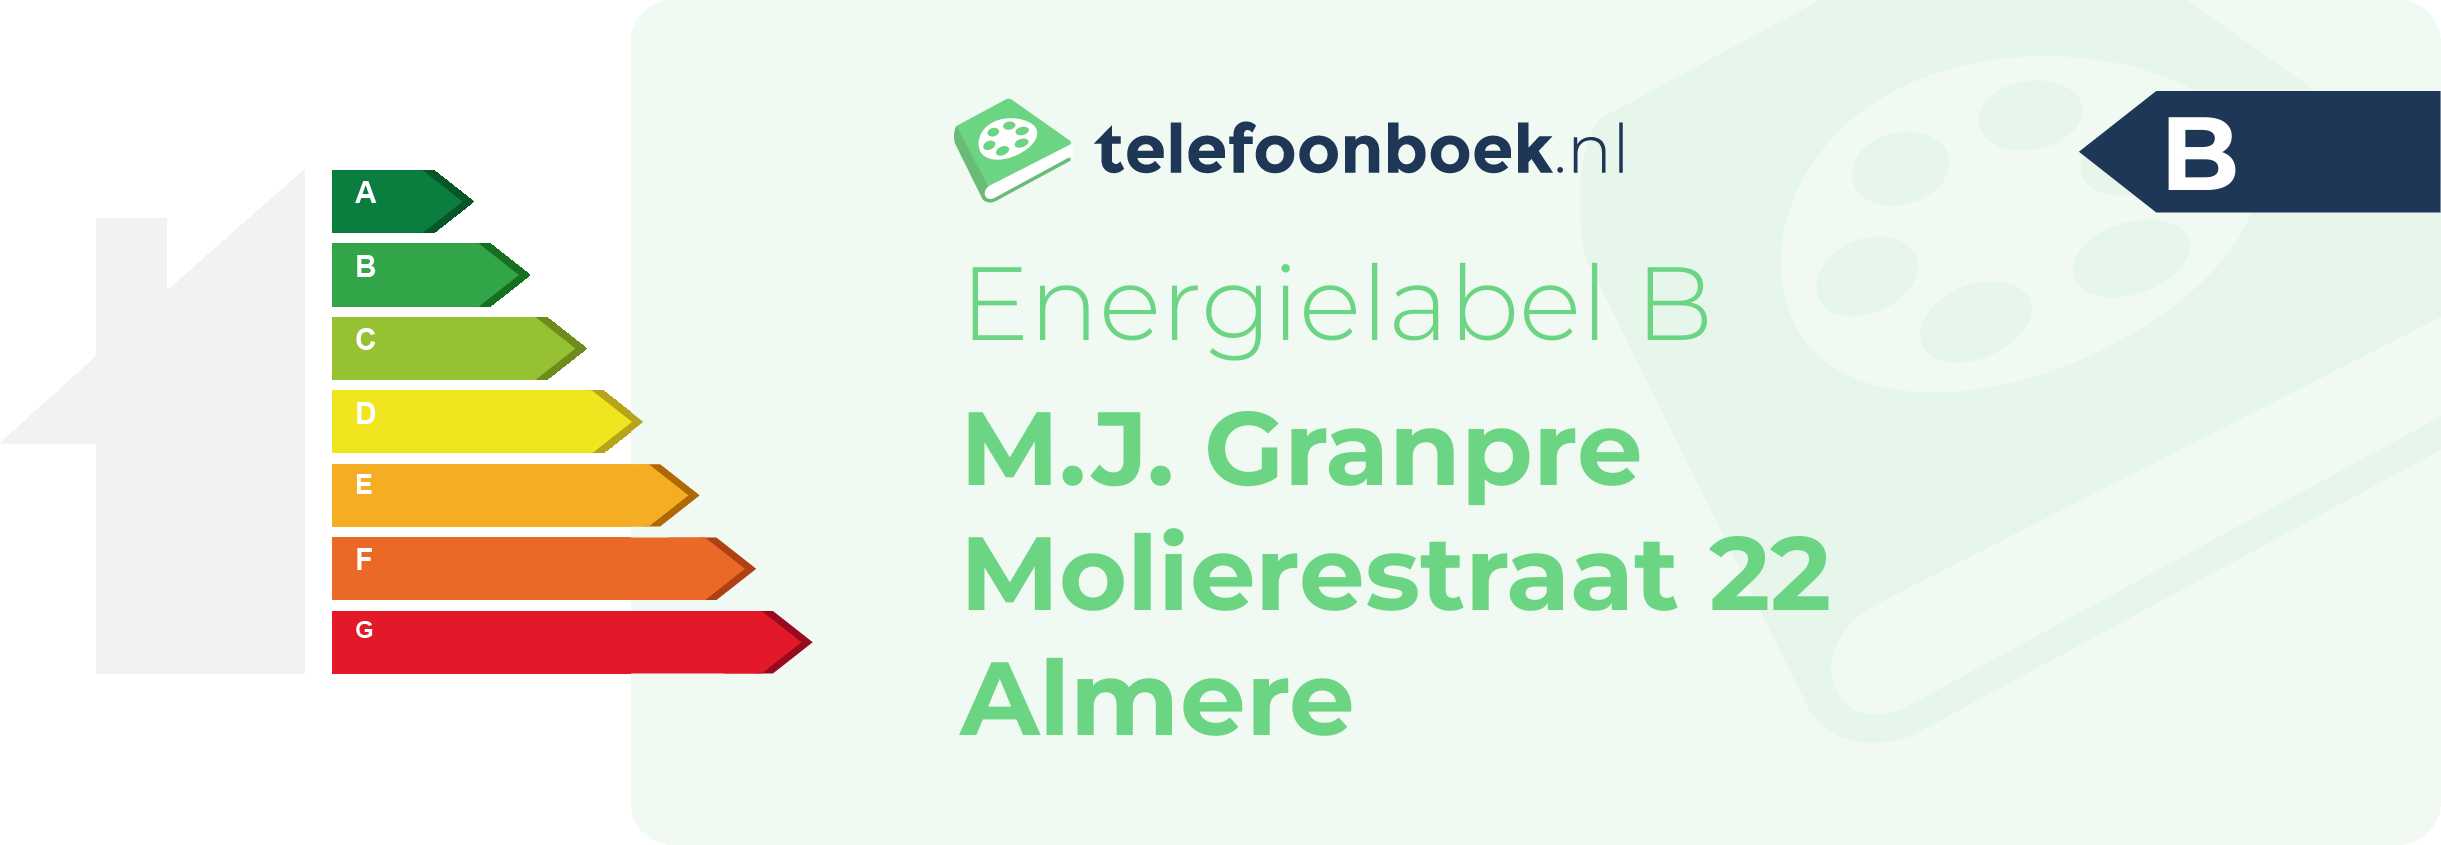 Energielabel M.J. Granpre Molierestraat 22 Almere